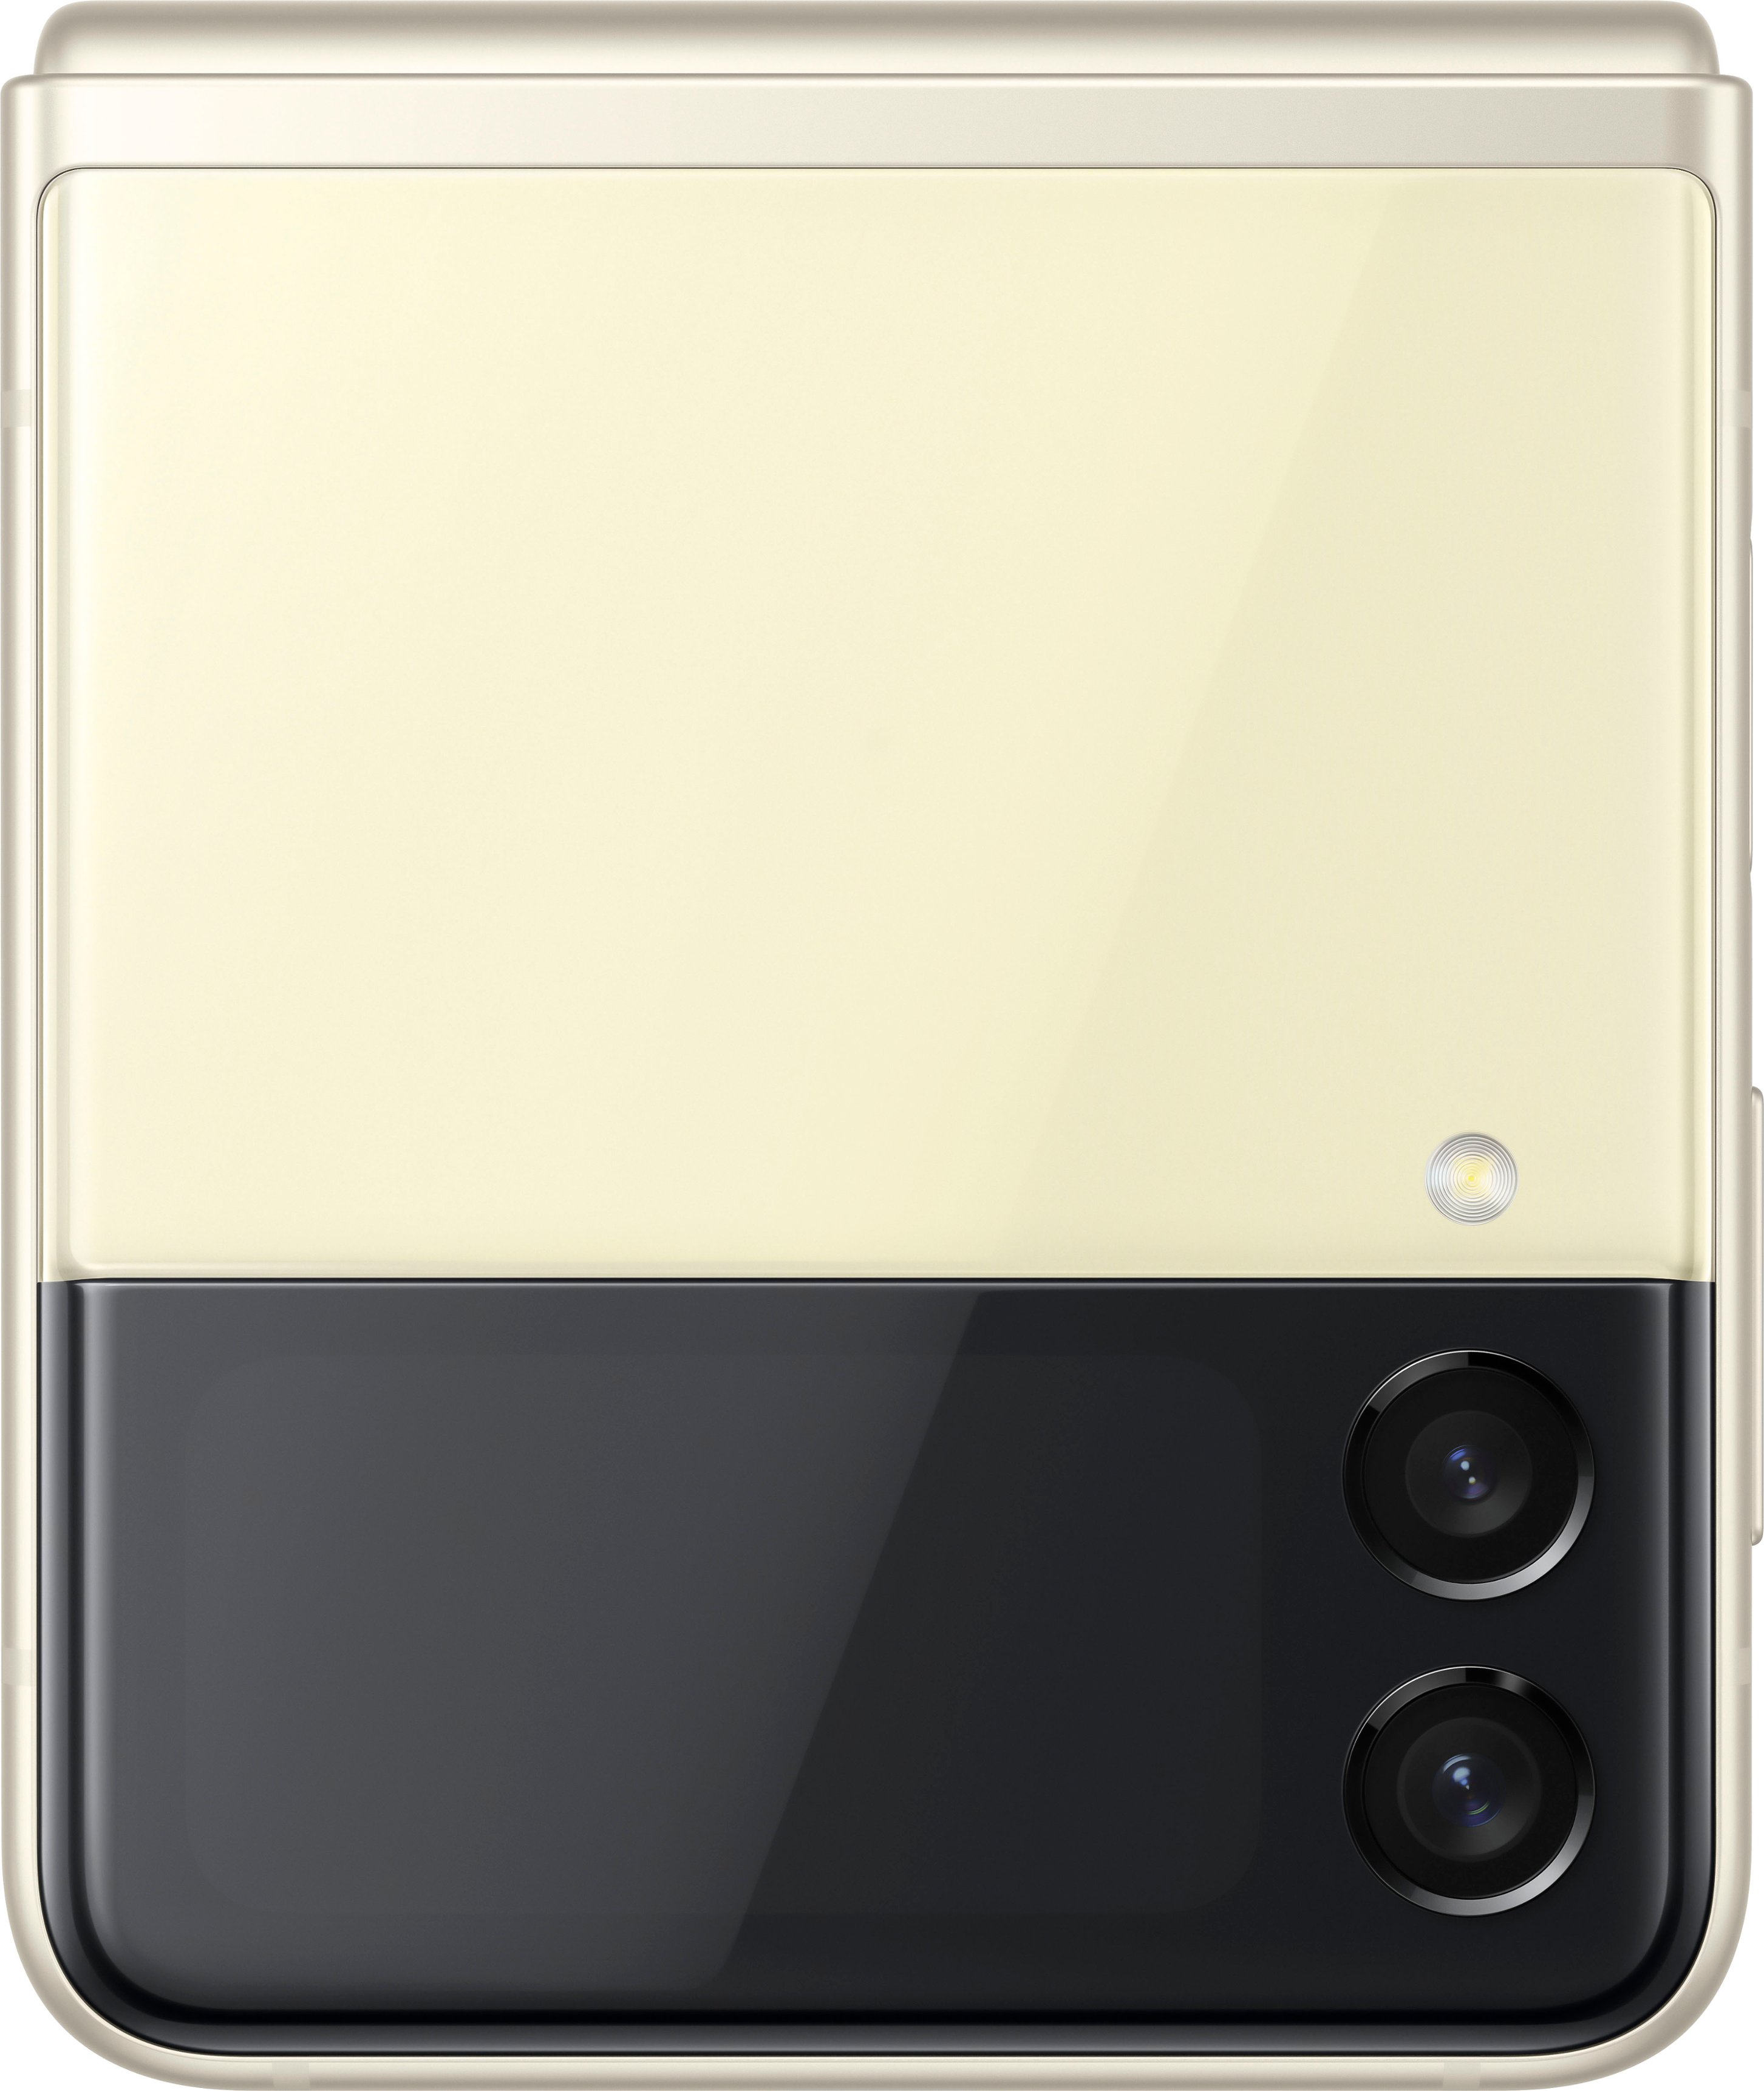 SM-F711UZWEXAA  Galaxy Z Flip3 5G 256GB (Unlocked) White